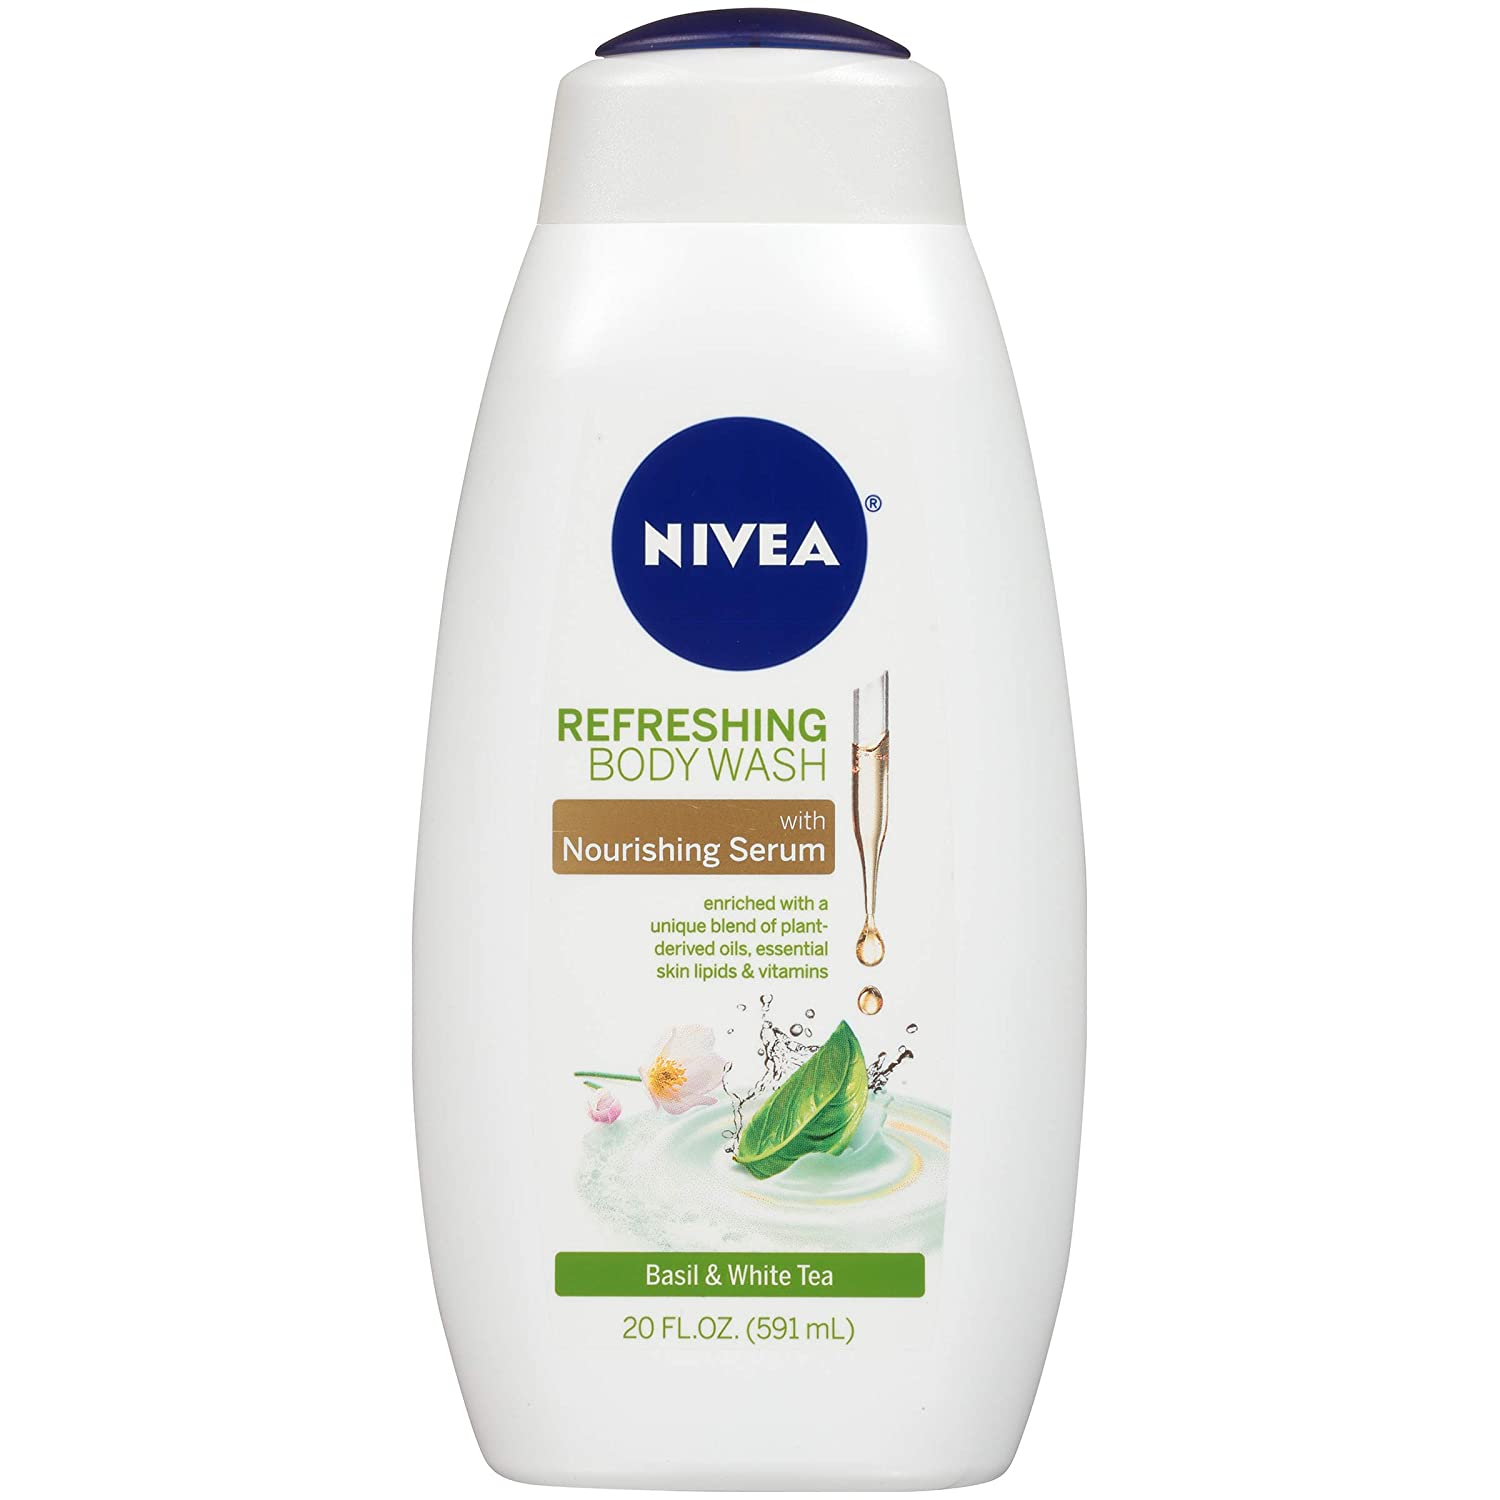 20-Oz NIVEA Refreshing Body Wash w/ Nourishing Serum (Basil & White Tea) $3.05 w/ S&S + Free Shipping w/ Prime or on $25+